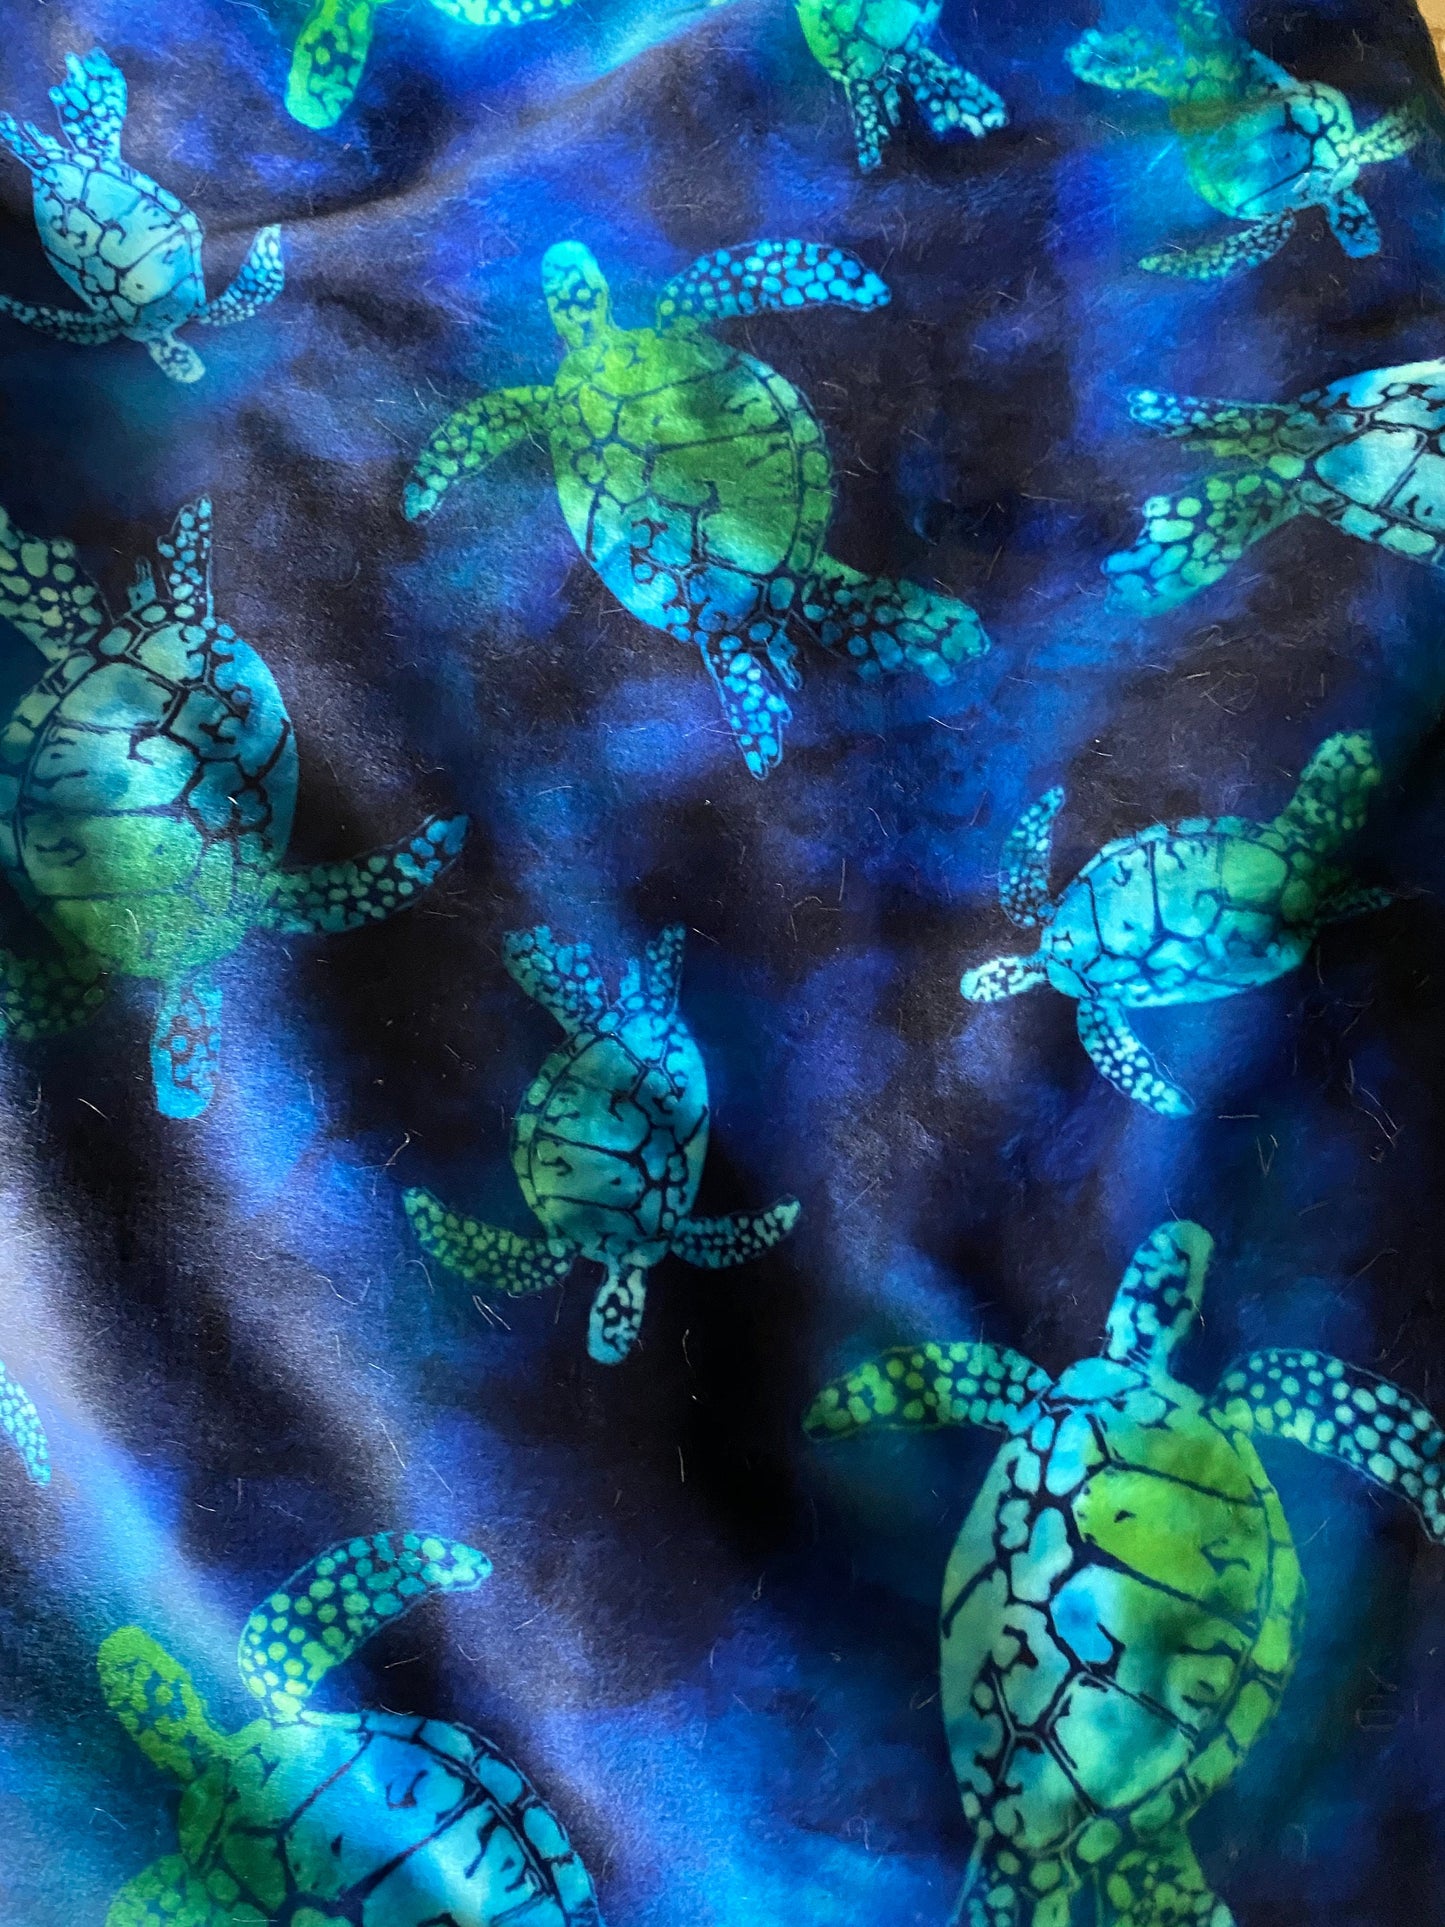 Minky Sea Turtle Throw Blanket, Personalized Minky Blanket. Sea Turtle  50 x 60 inch Throw